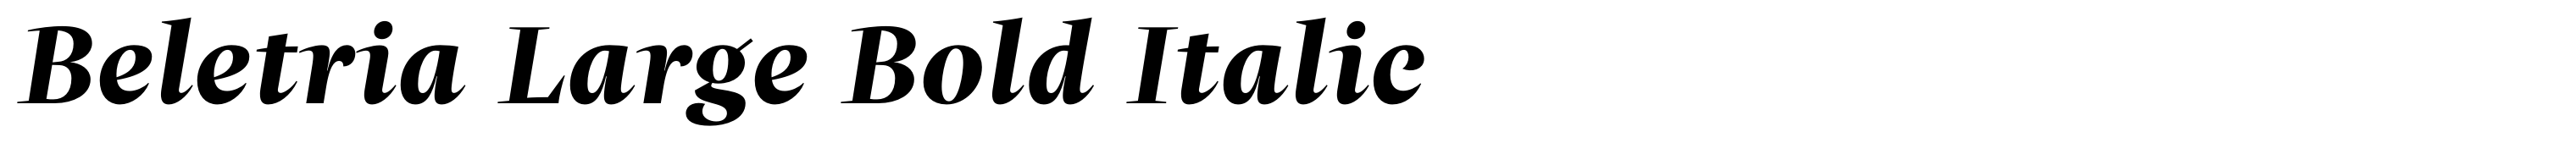 Beletria Large Bold Italic